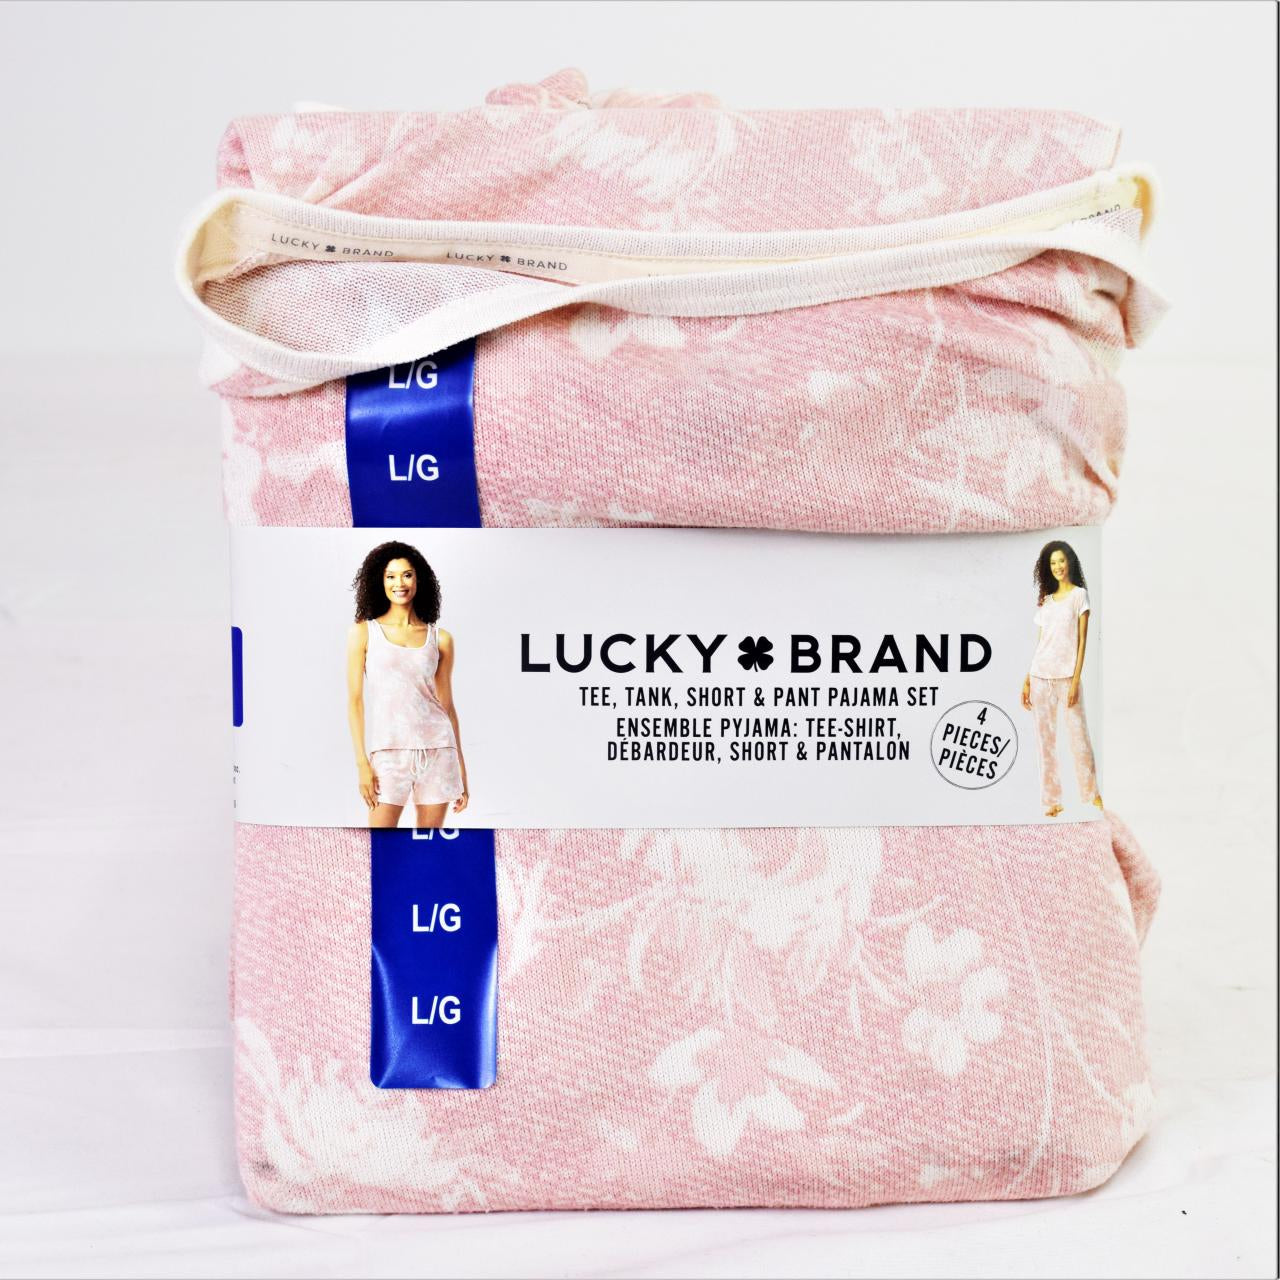 Lucky Brand Tee, Tank, Short & Pant Pajama Set Pink Floral 4Pc - L